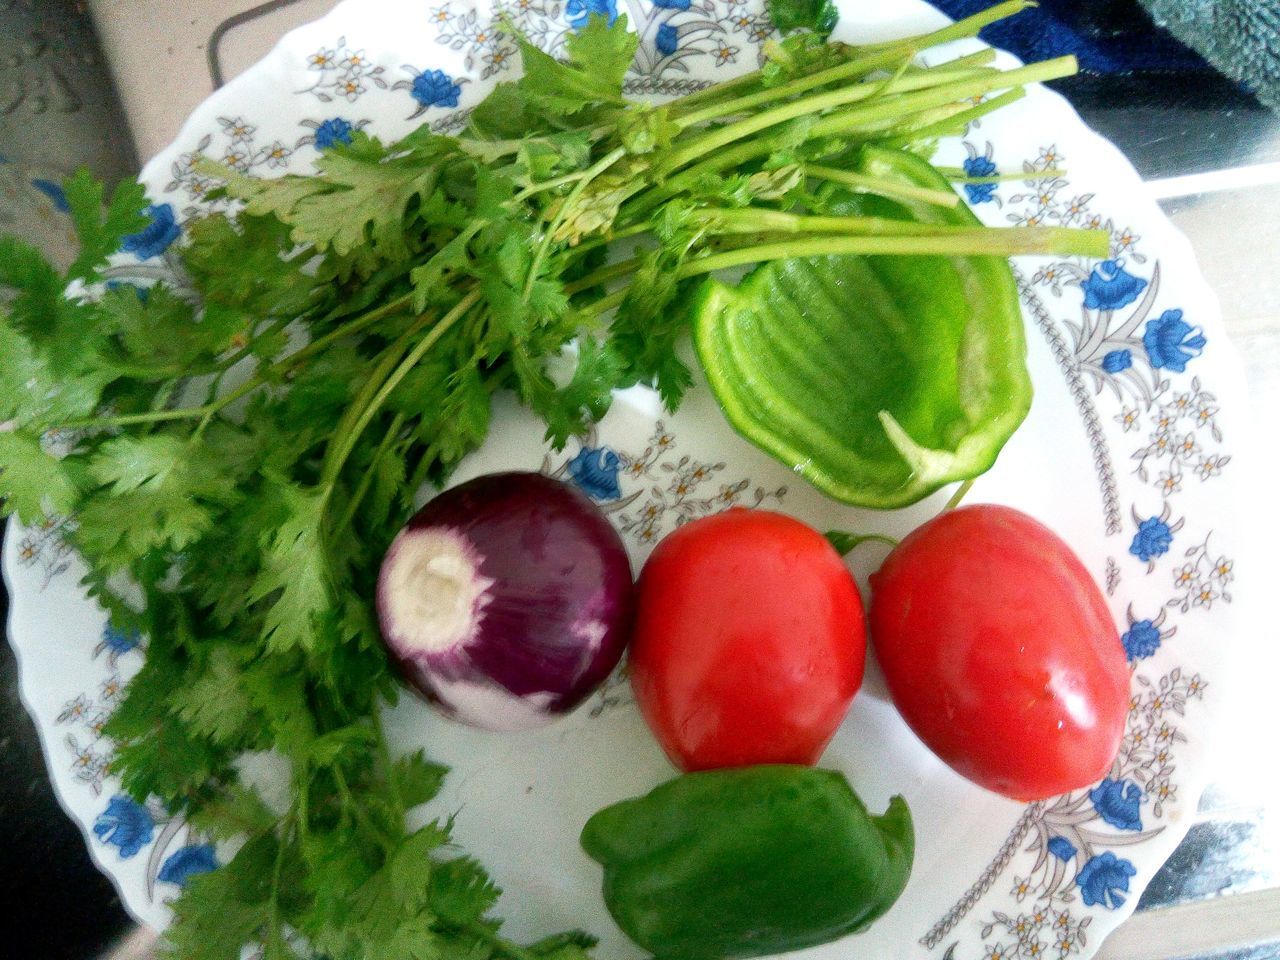 Ingredients coriander